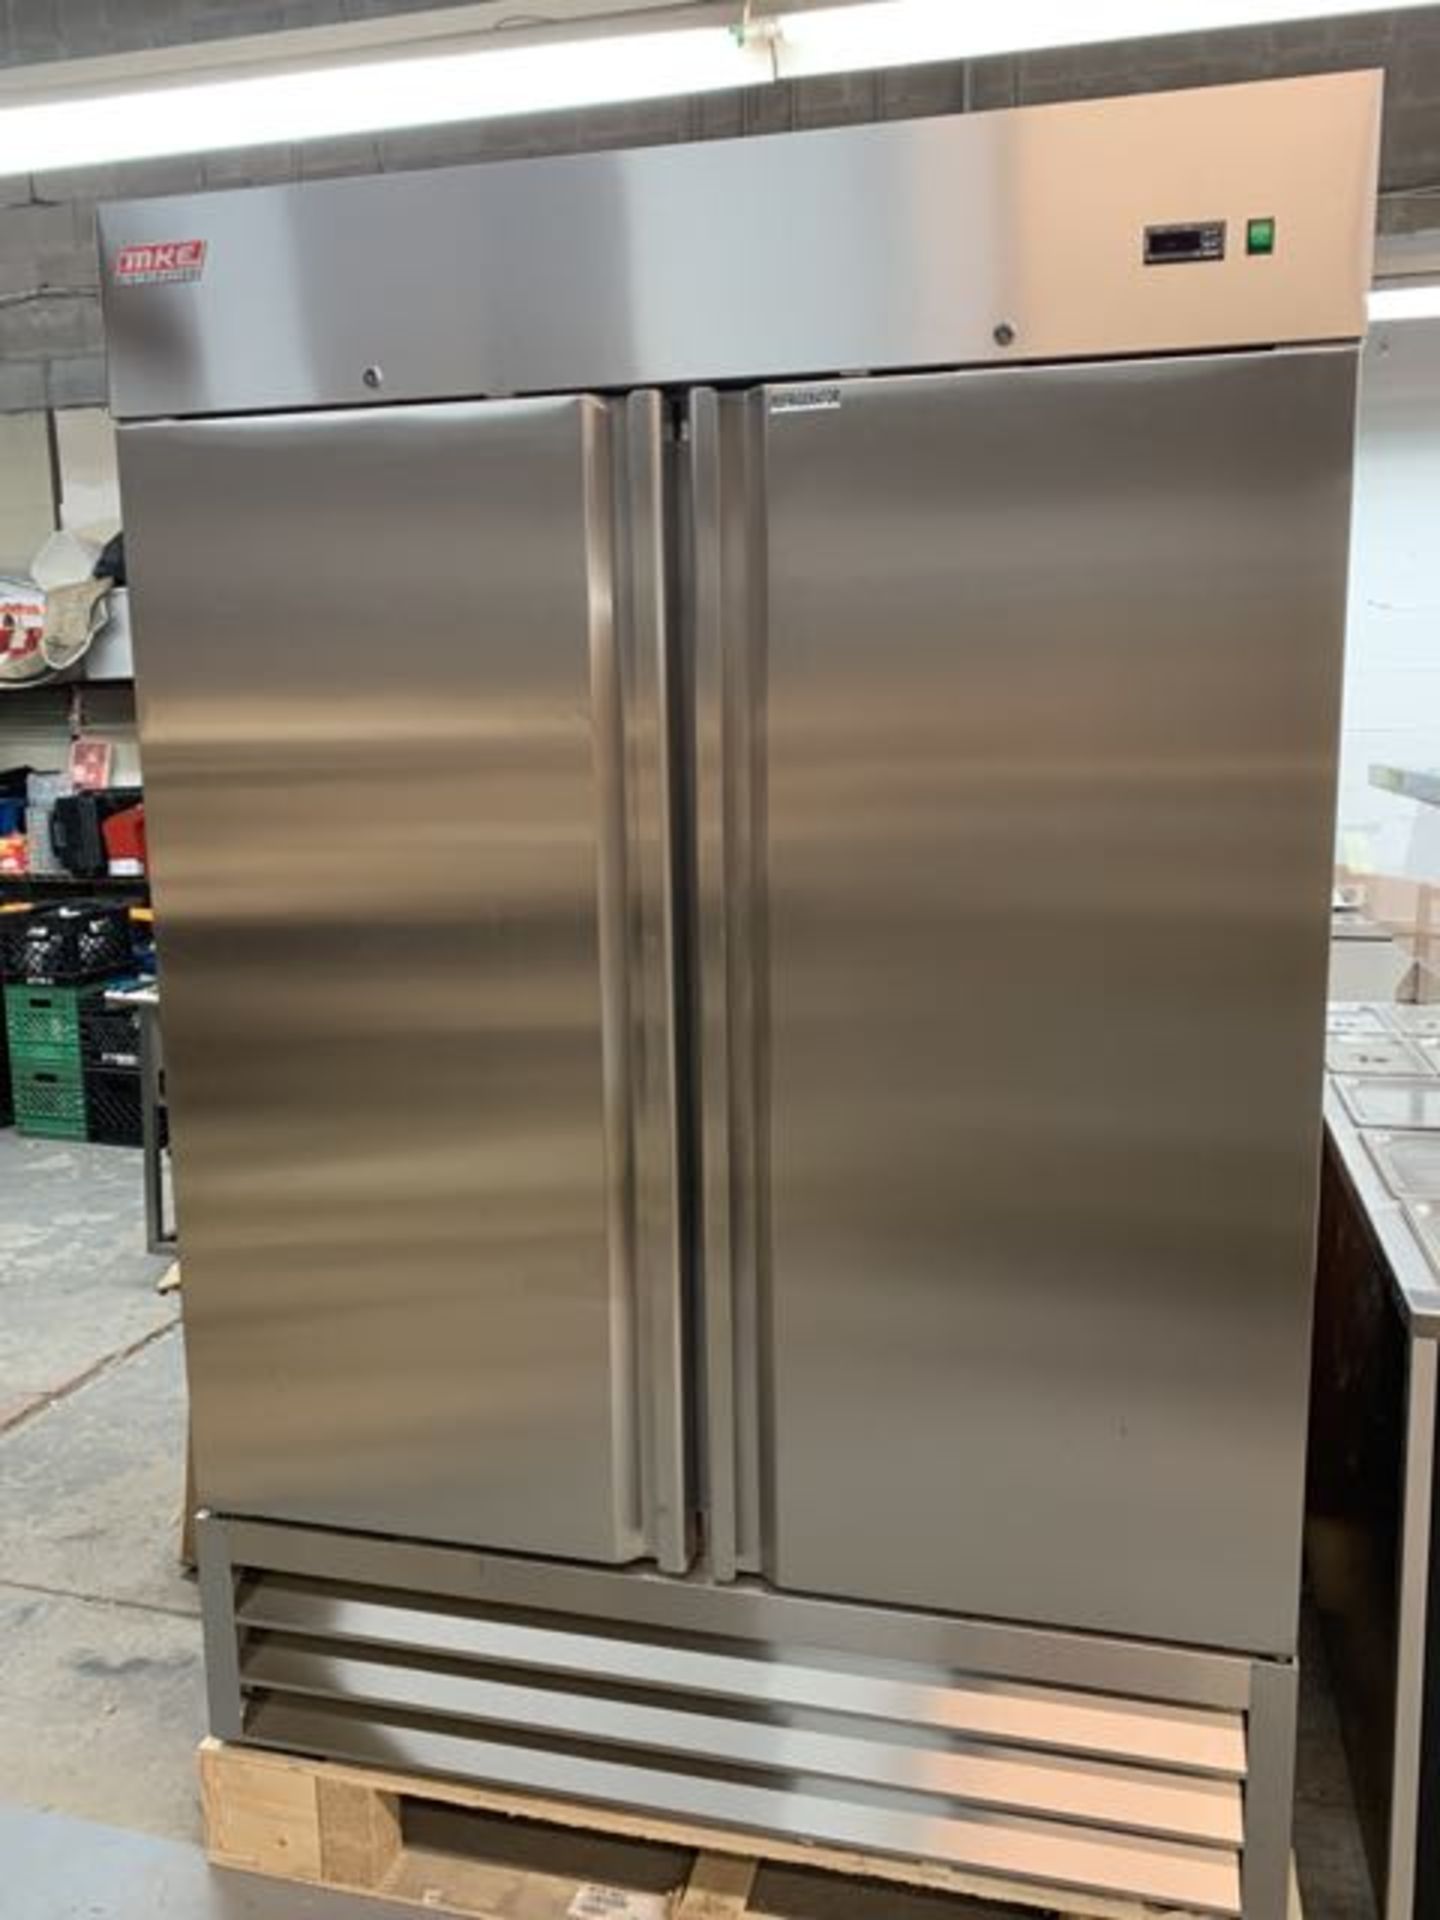 Réfrigérateur MKE - NEUF - 2 portes # RI 49 SS 54 x 33"